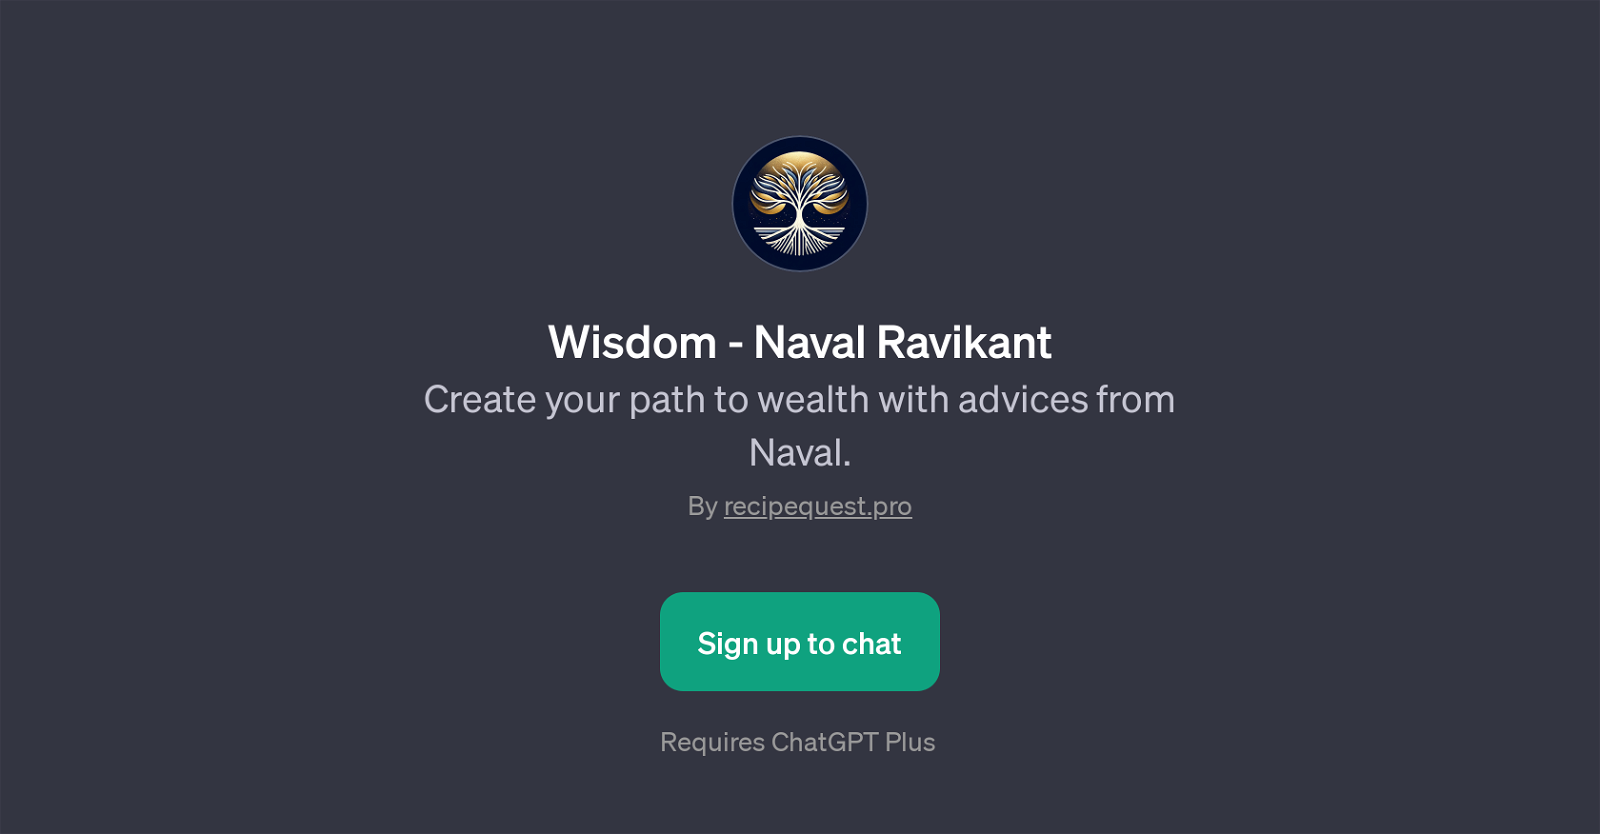 Wisdom - Naval Ravikant website